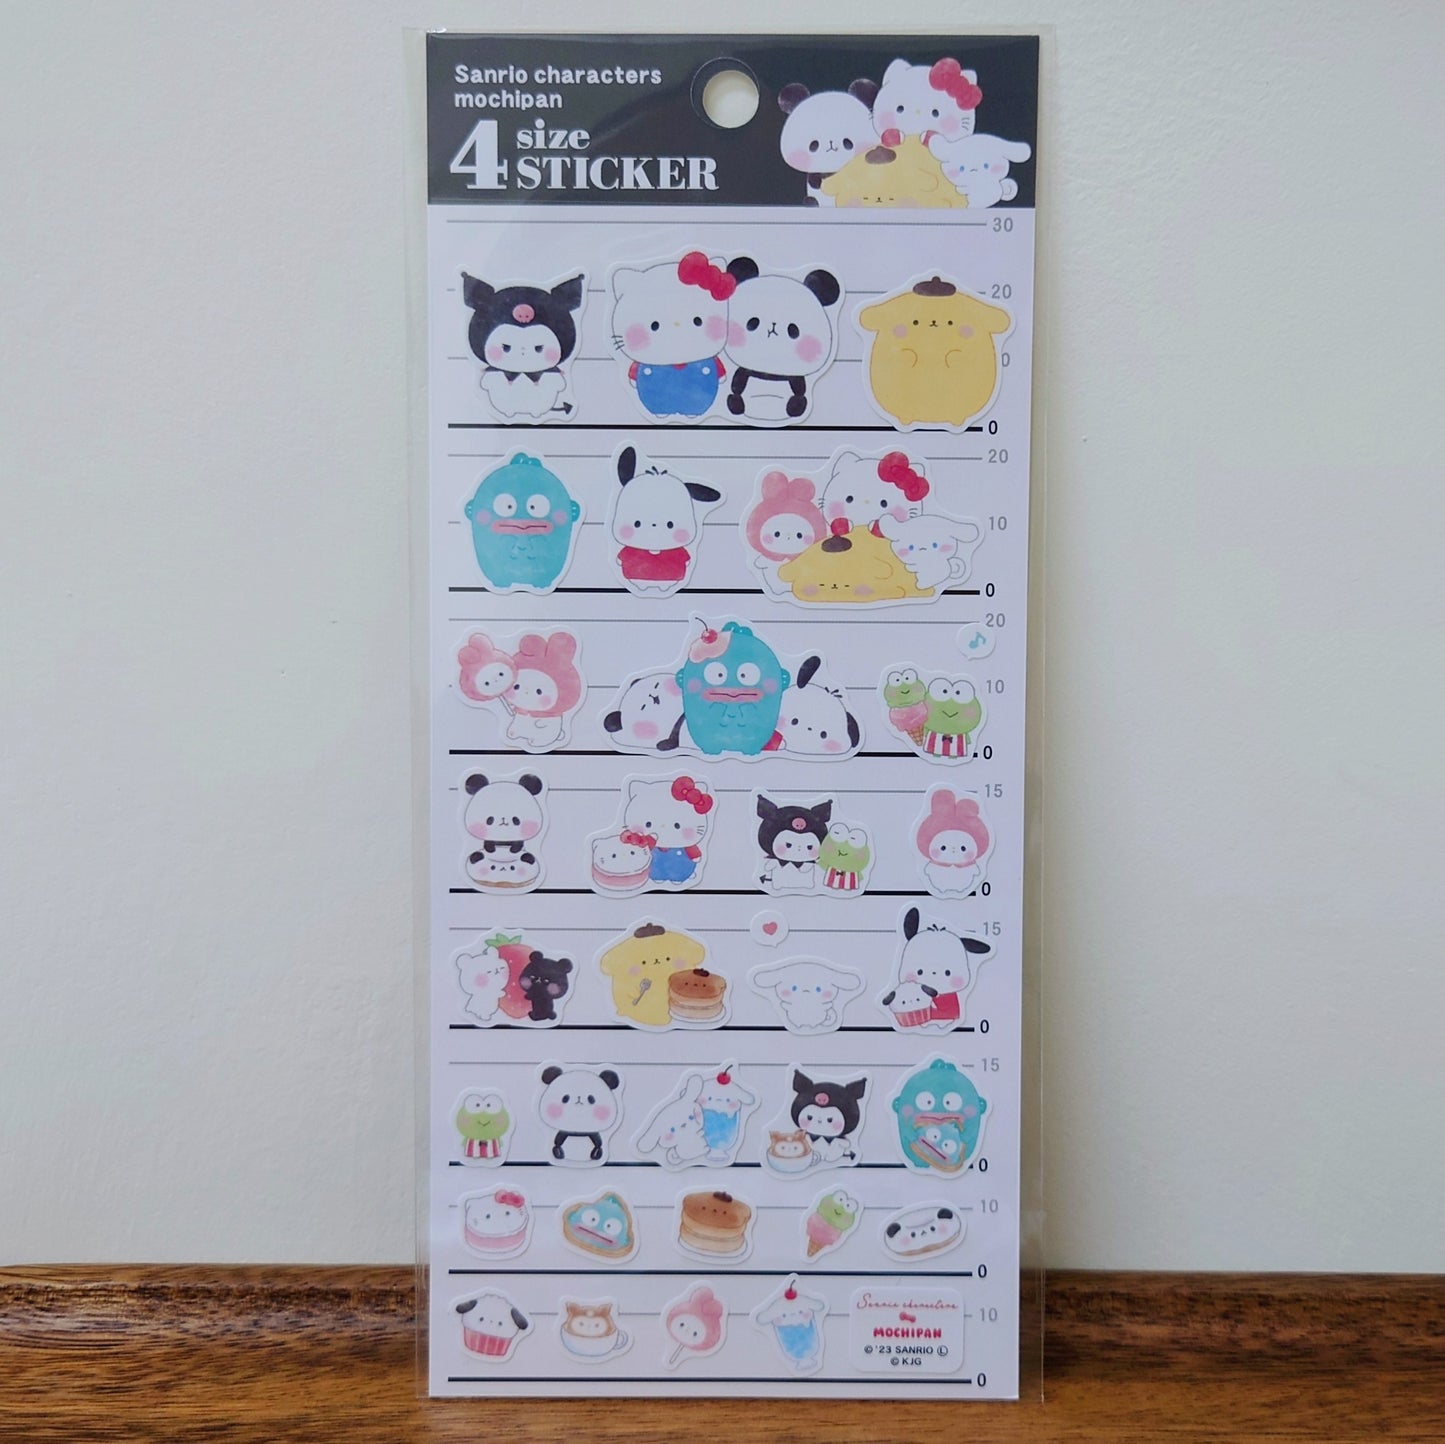 4 size sticker mochipan sanrio characters